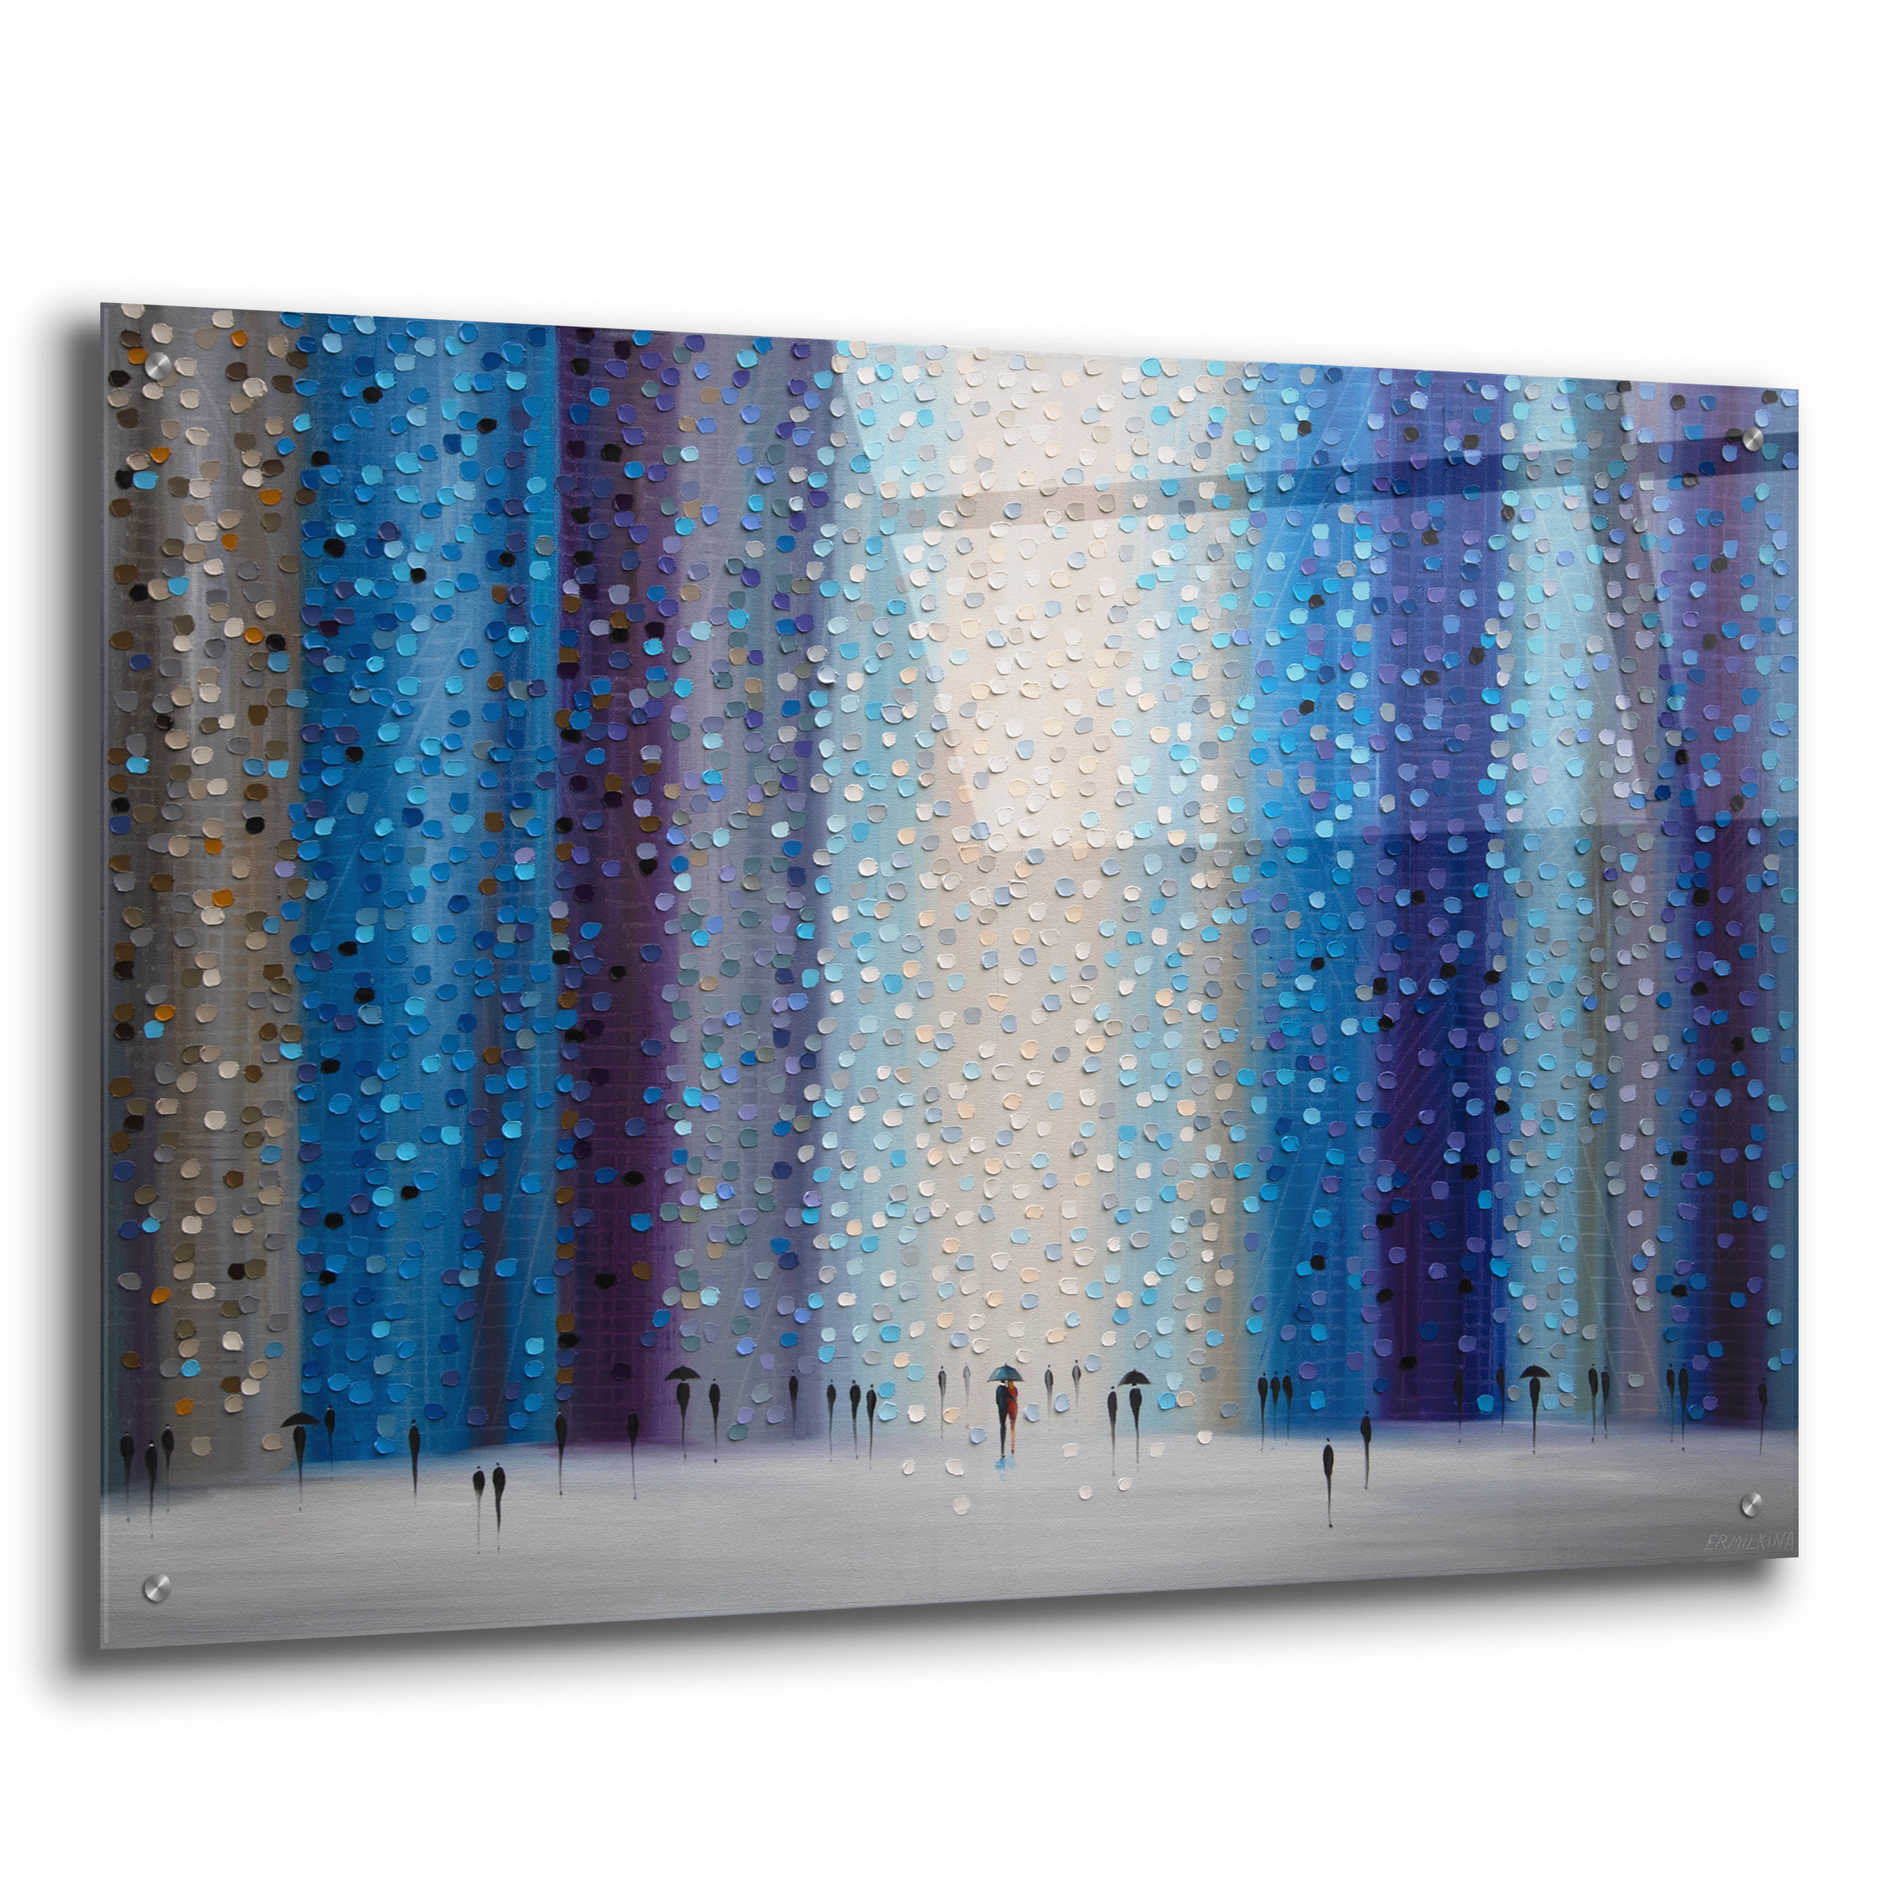 Epic Art 'Rainy City For' by Ekaterina Ermilkina Acrylic Glass Wall Art,36x24